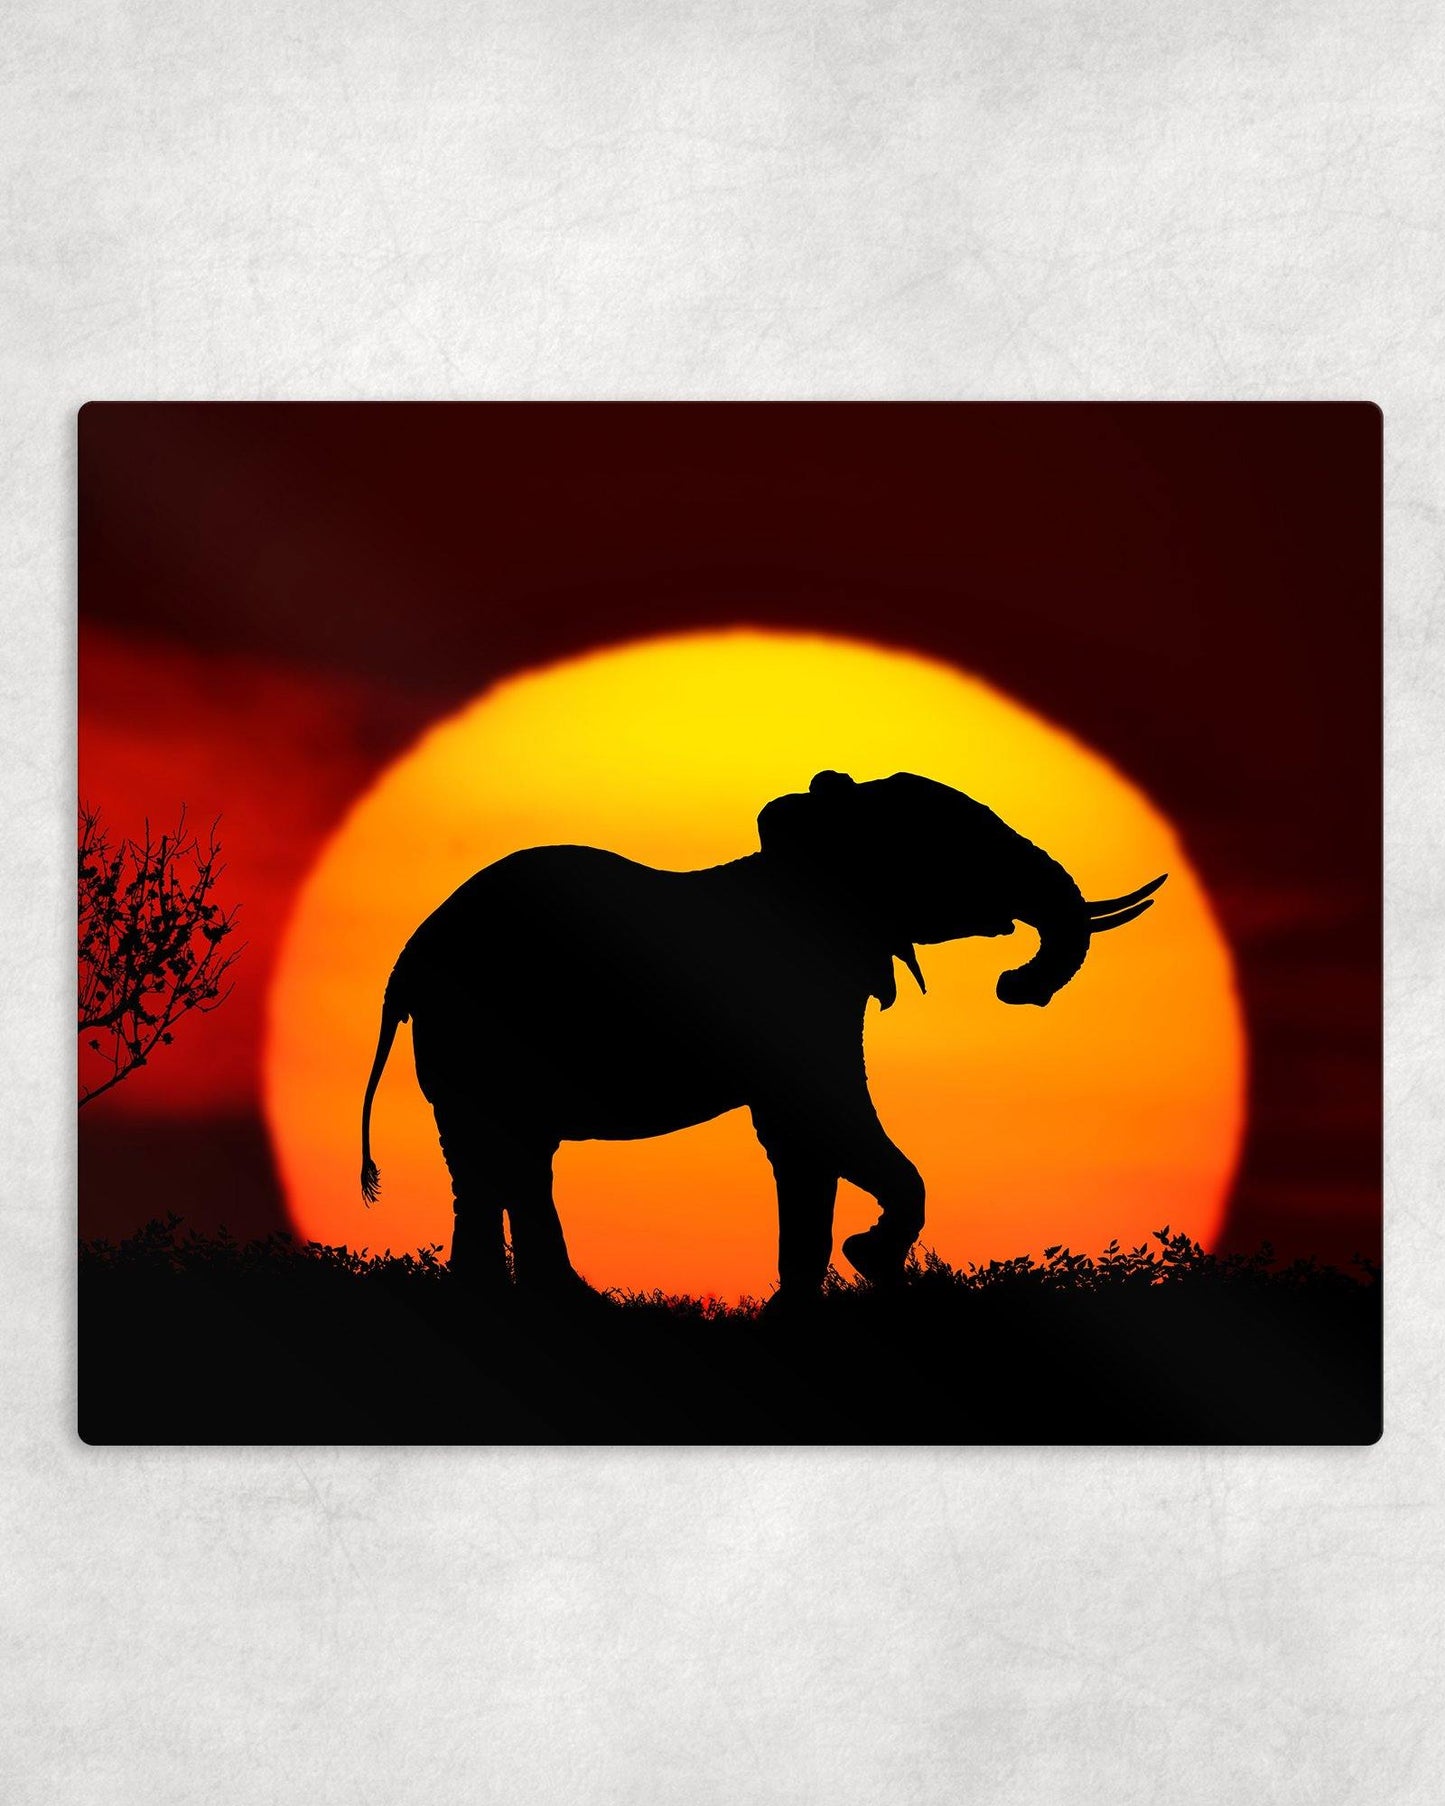 Elephant Sunset Silhouette Metal Photo Panel - 8x10 - Schoppix Gifts